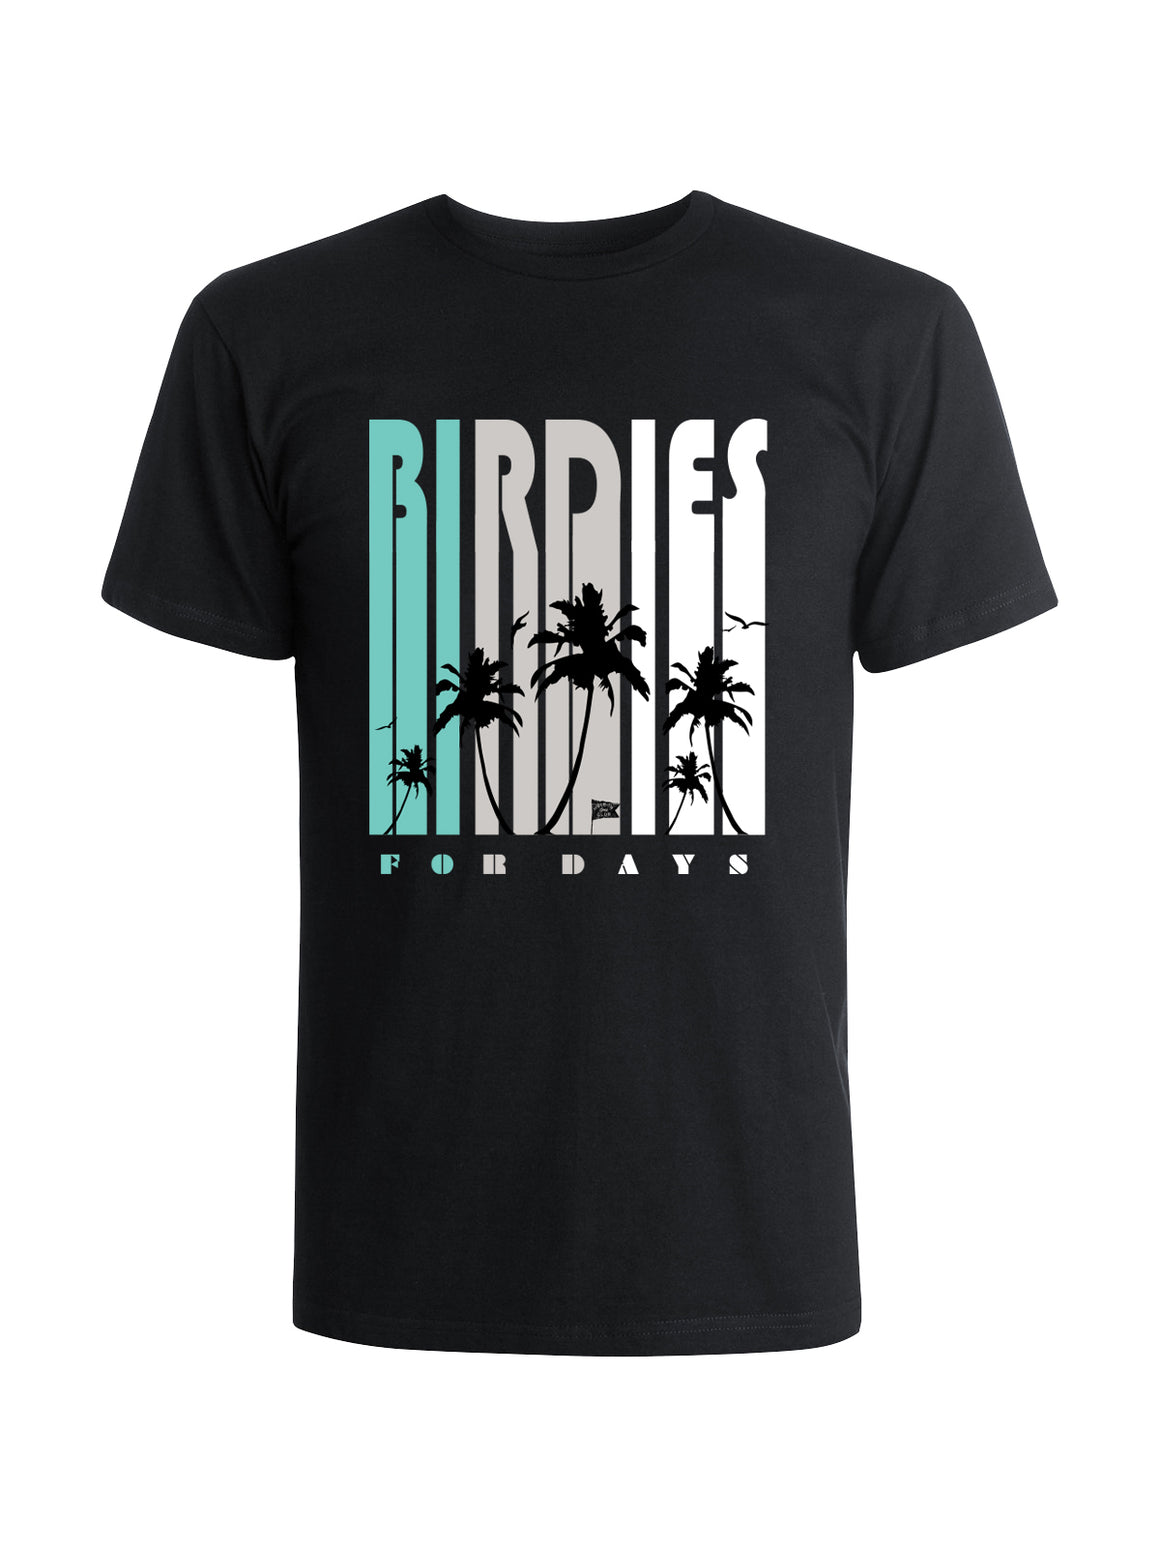 Birdies for Days Tee Shirt - Black